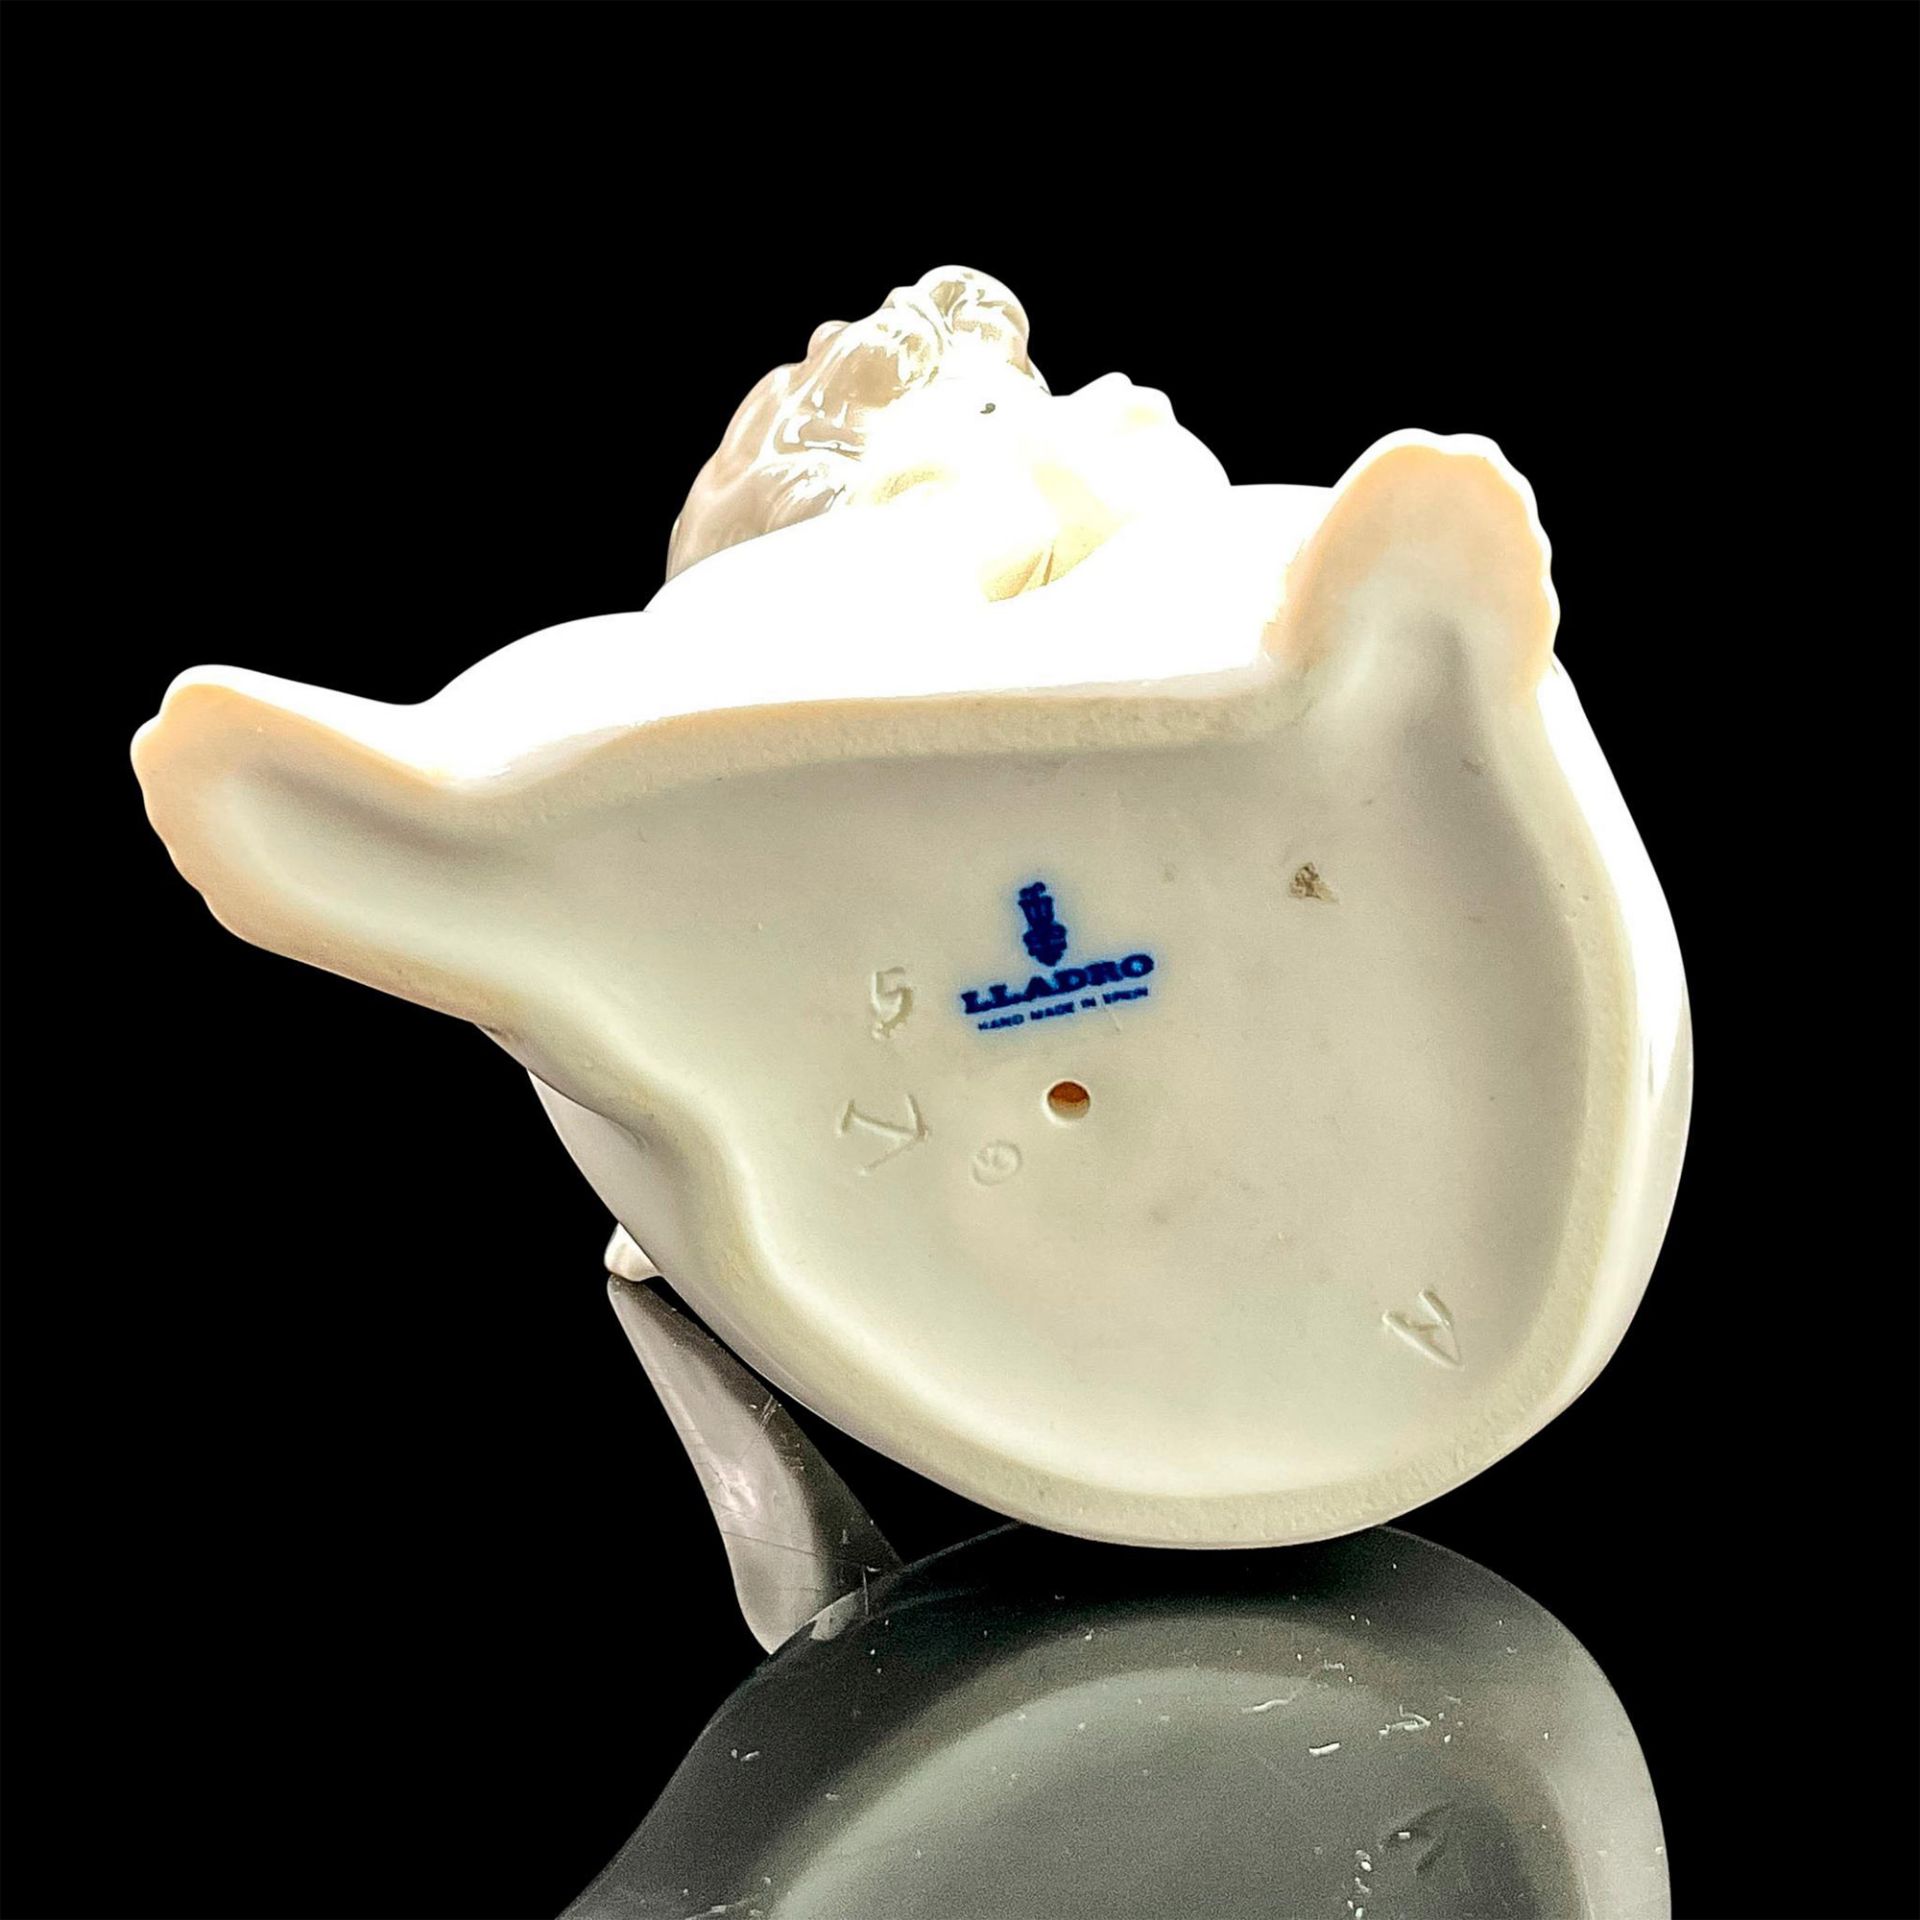 Cherub, Dreaming 1004961 - Lladro Porcelain Figurine - Image 3 of 3